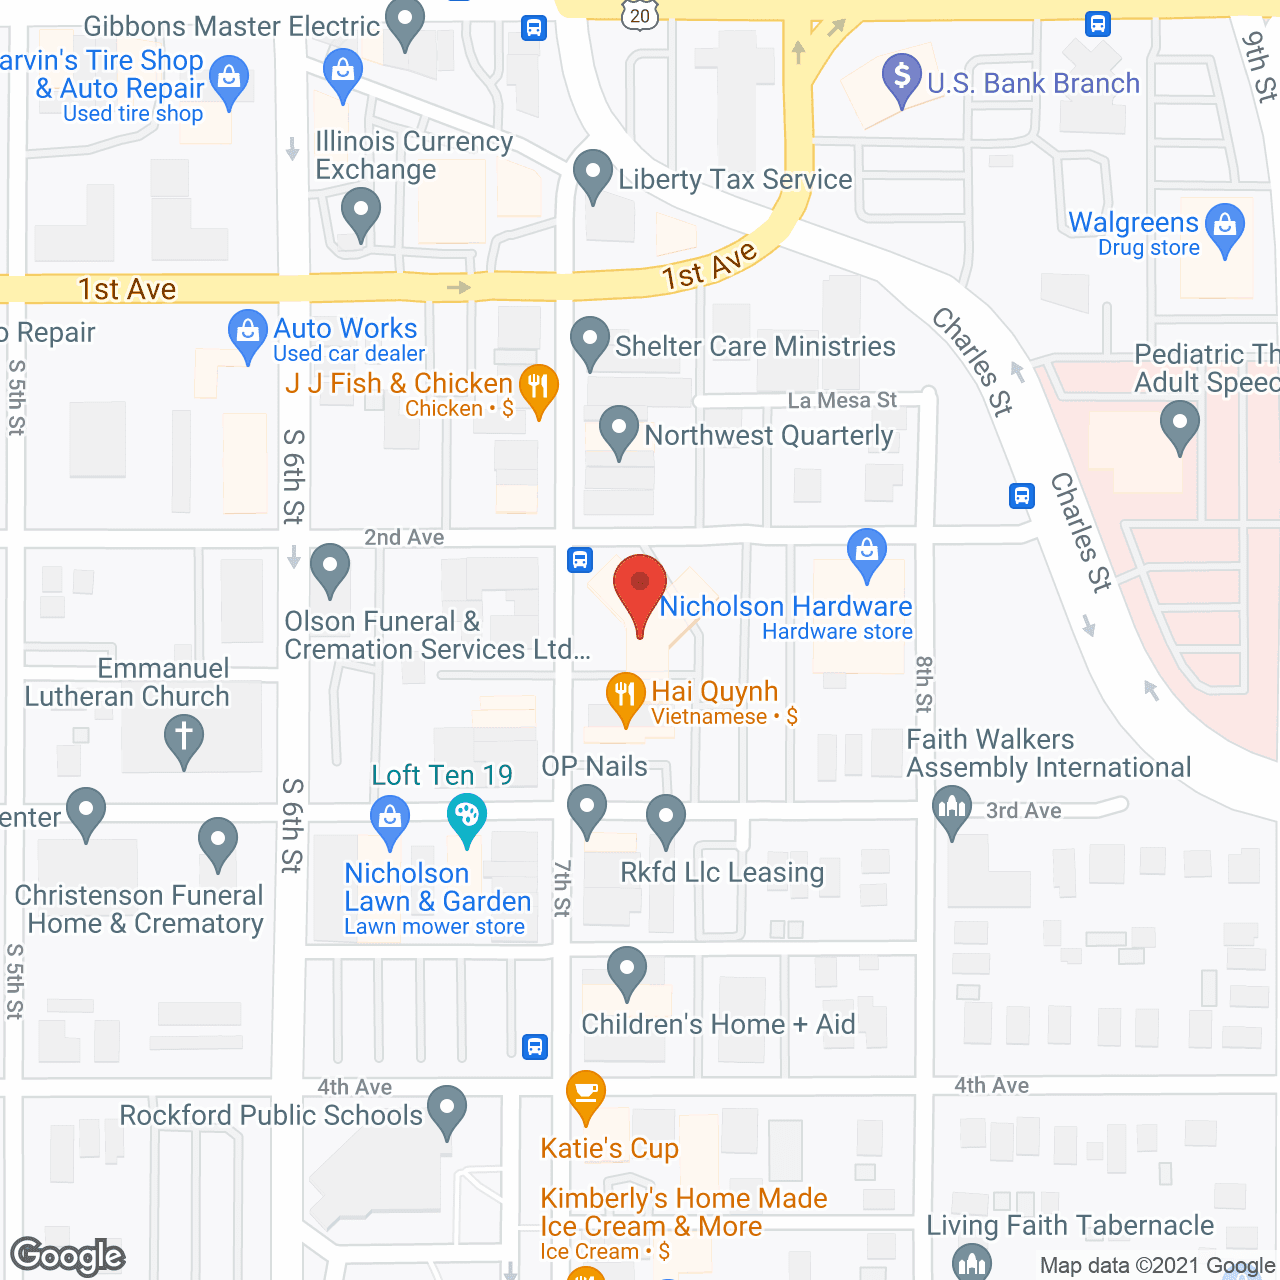 Valkommen Plaza in google map